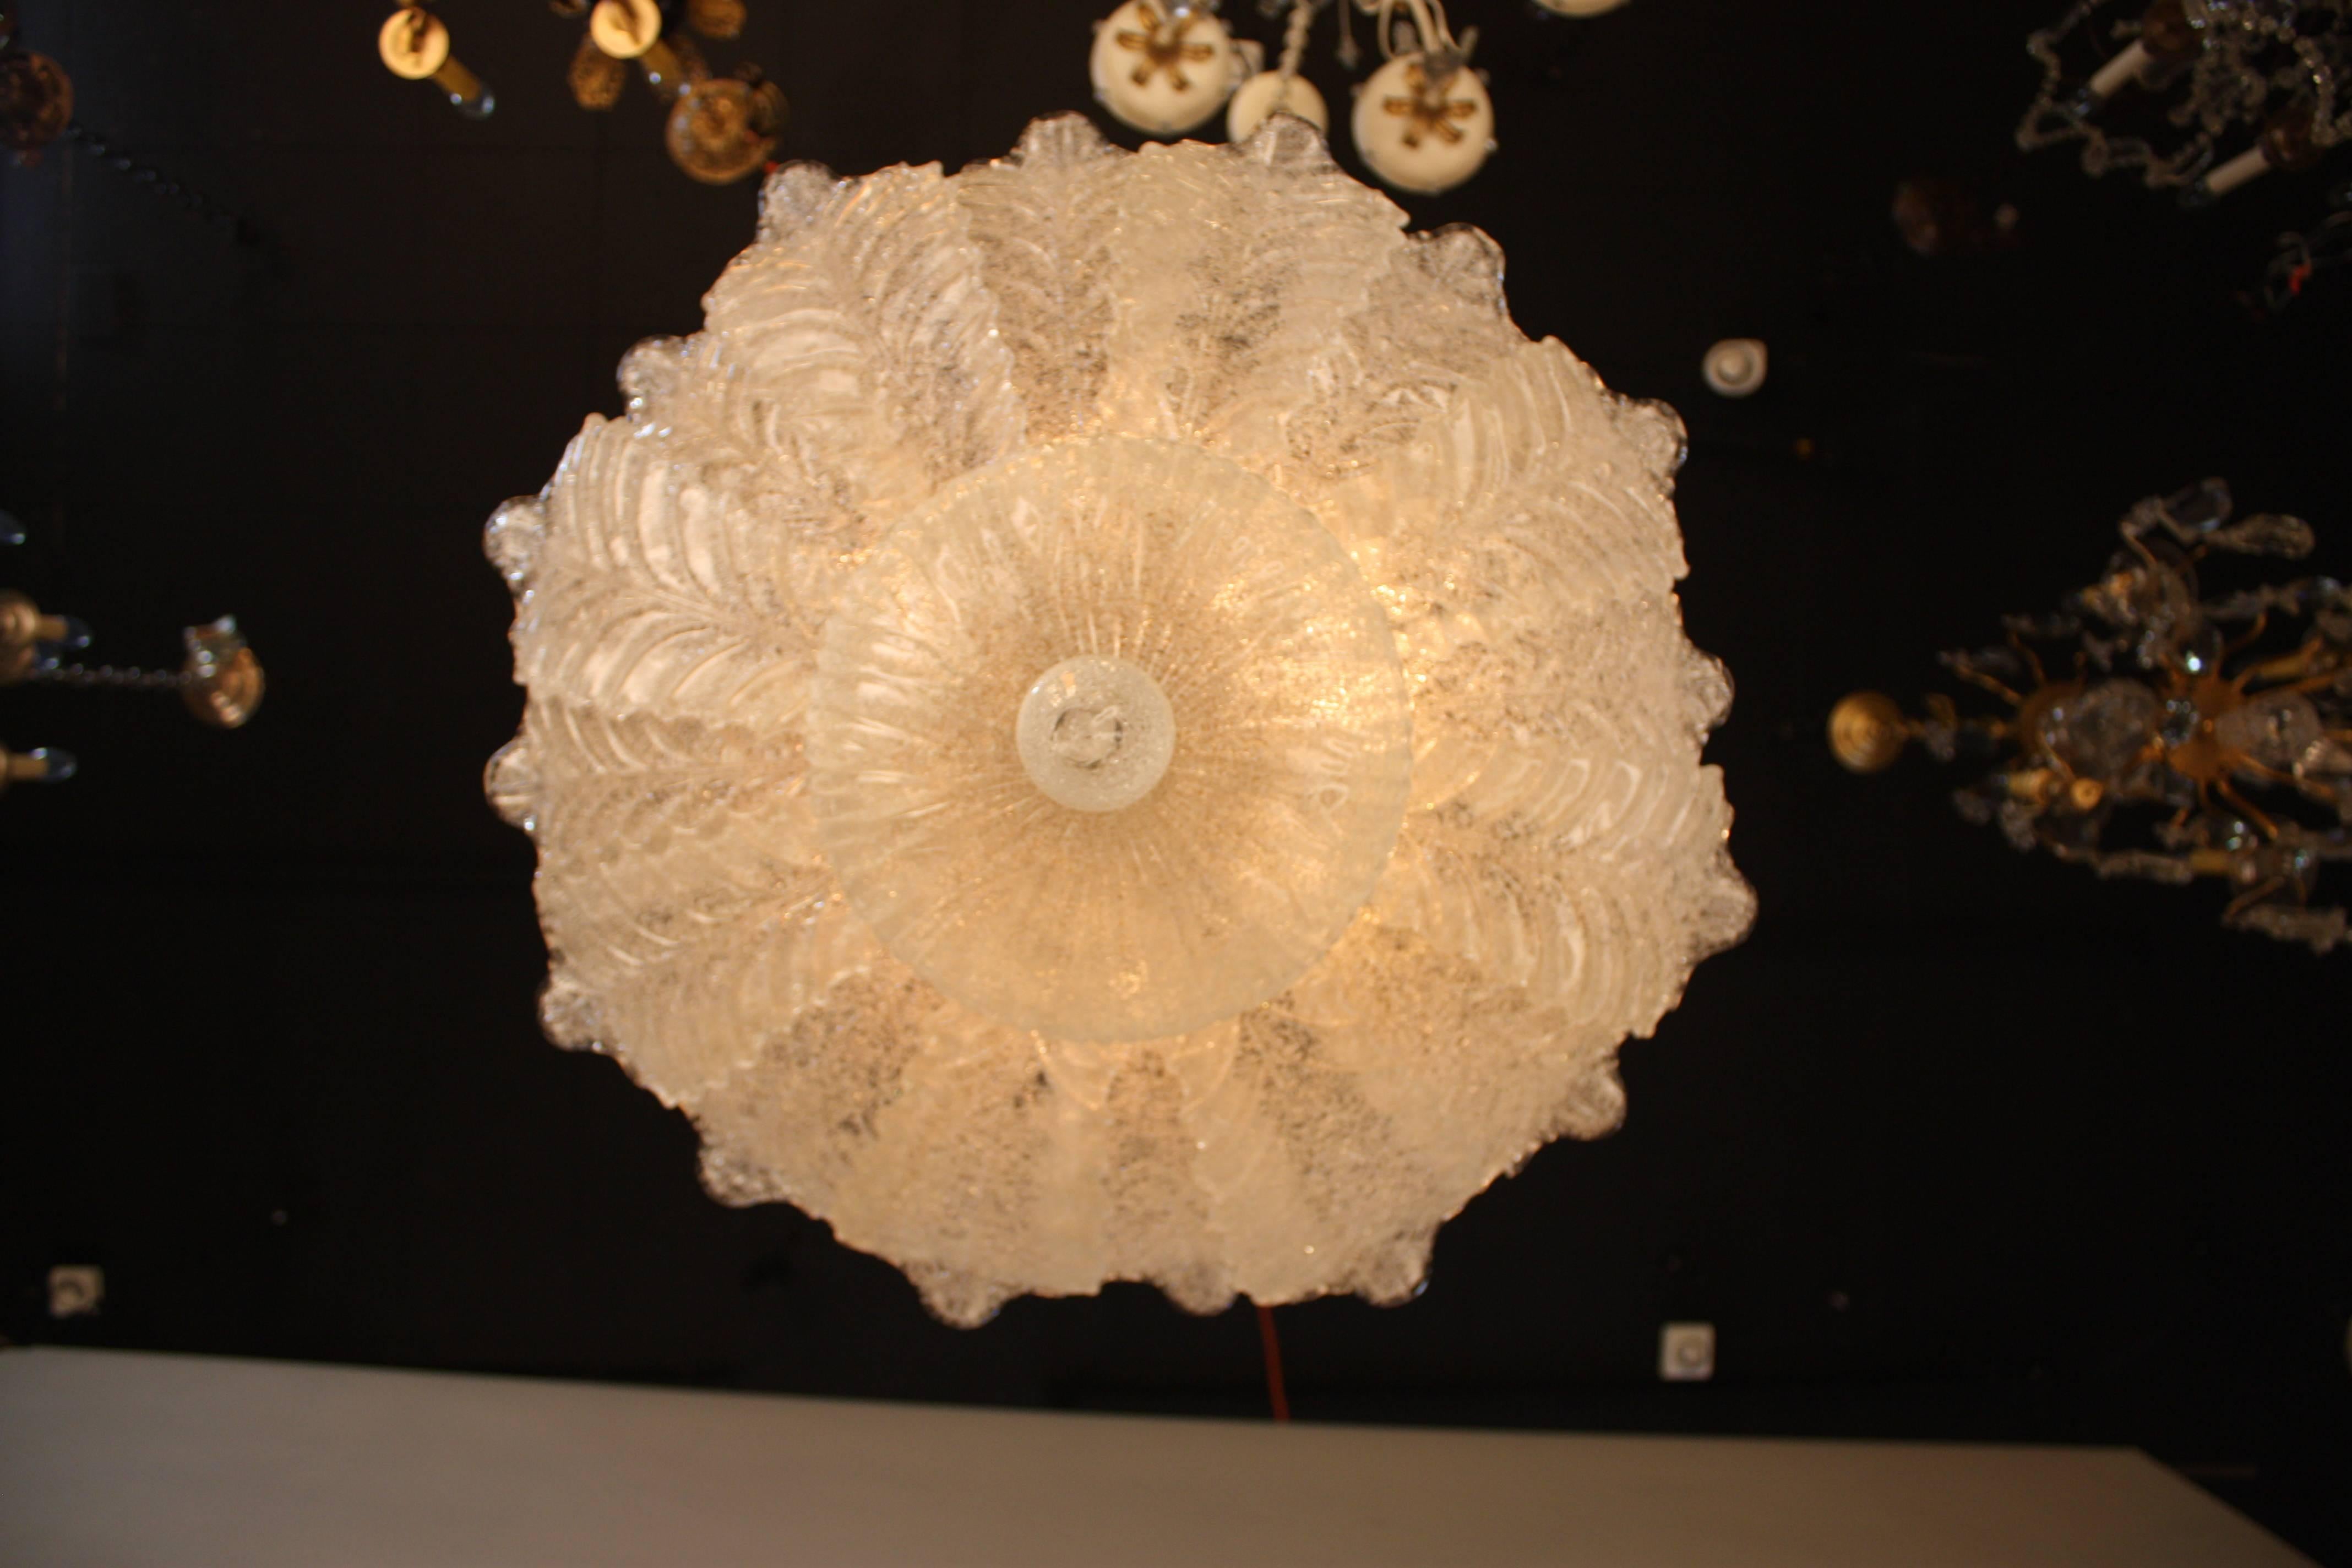 Exquisite handblown Murano glass flush mount chandelier by Barovier & Toso.

This flush mount chandelier is 25